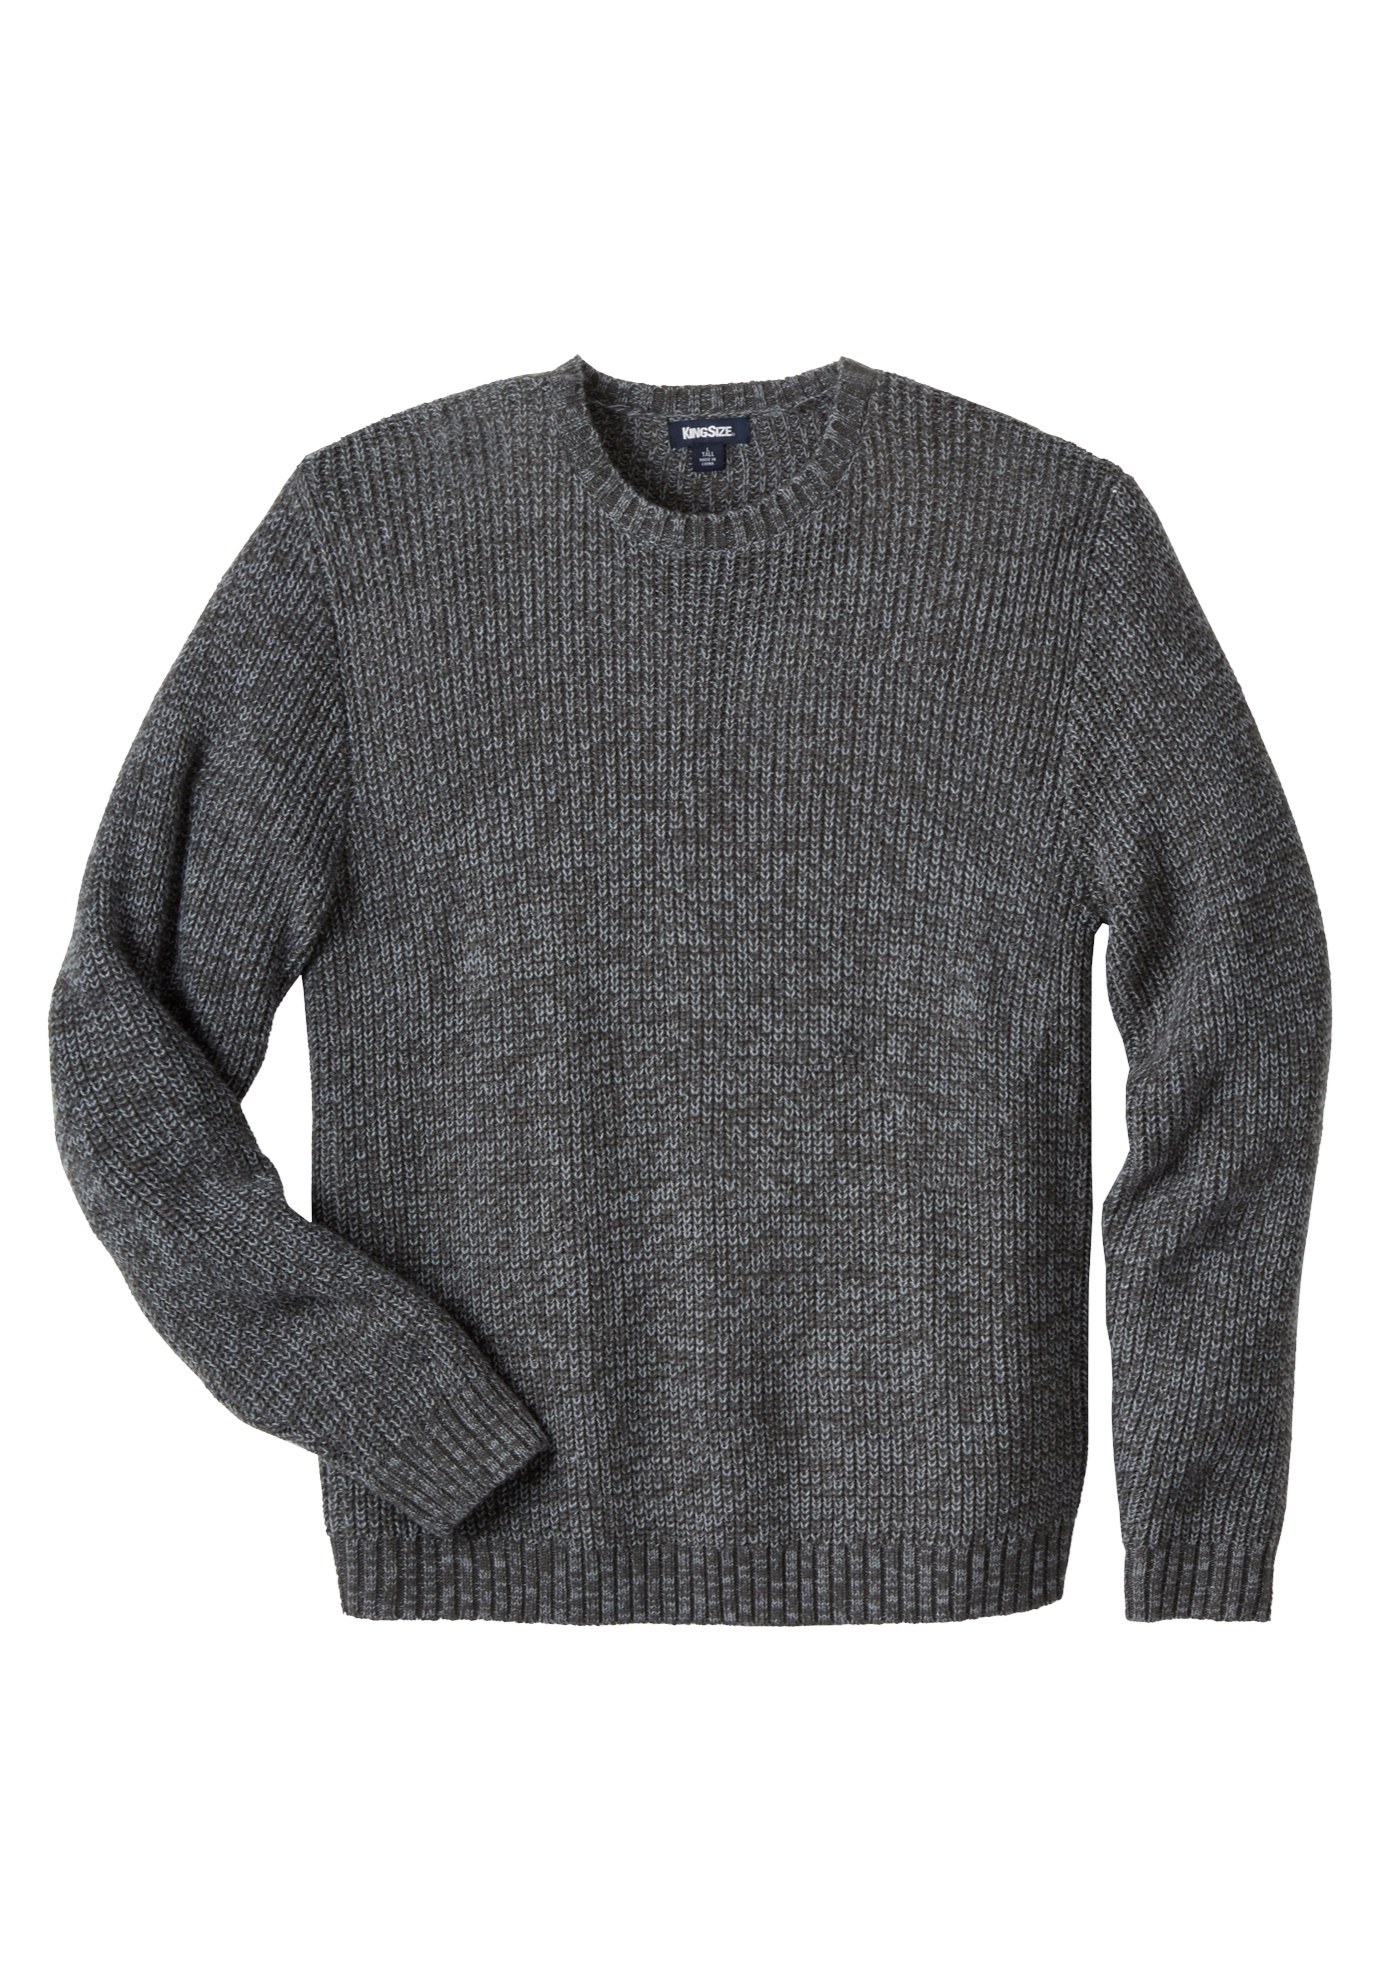 Kingsize Men's Big & Tall Shaker Knit Crewneck Sweater - Walmart.com